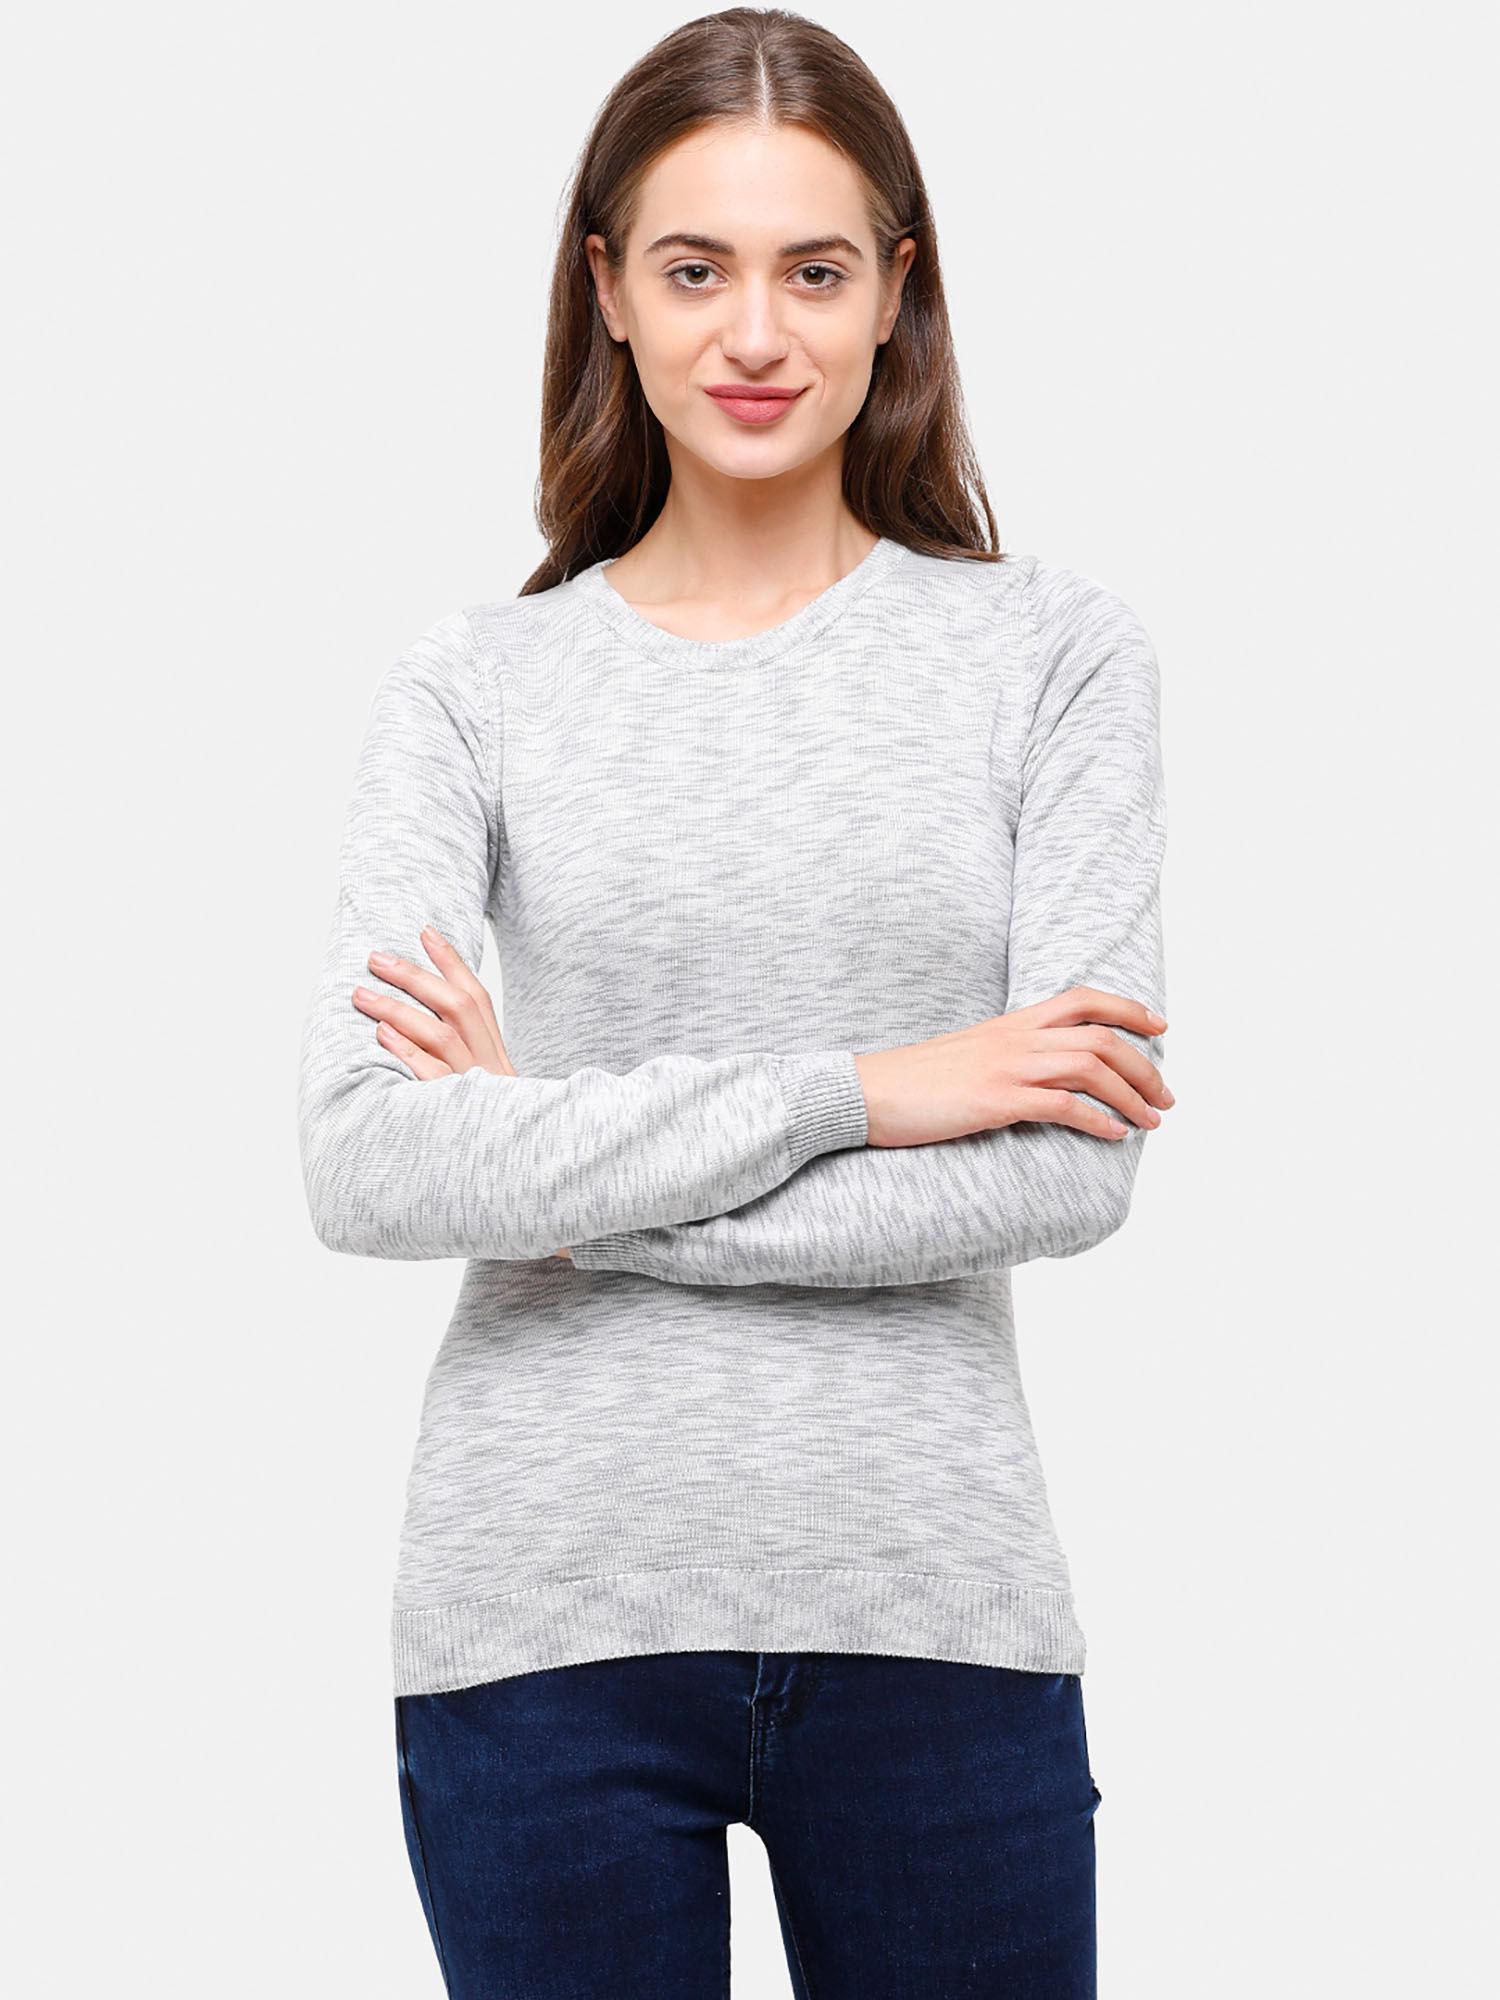 98 degree north's grey melange full sleeves sweater